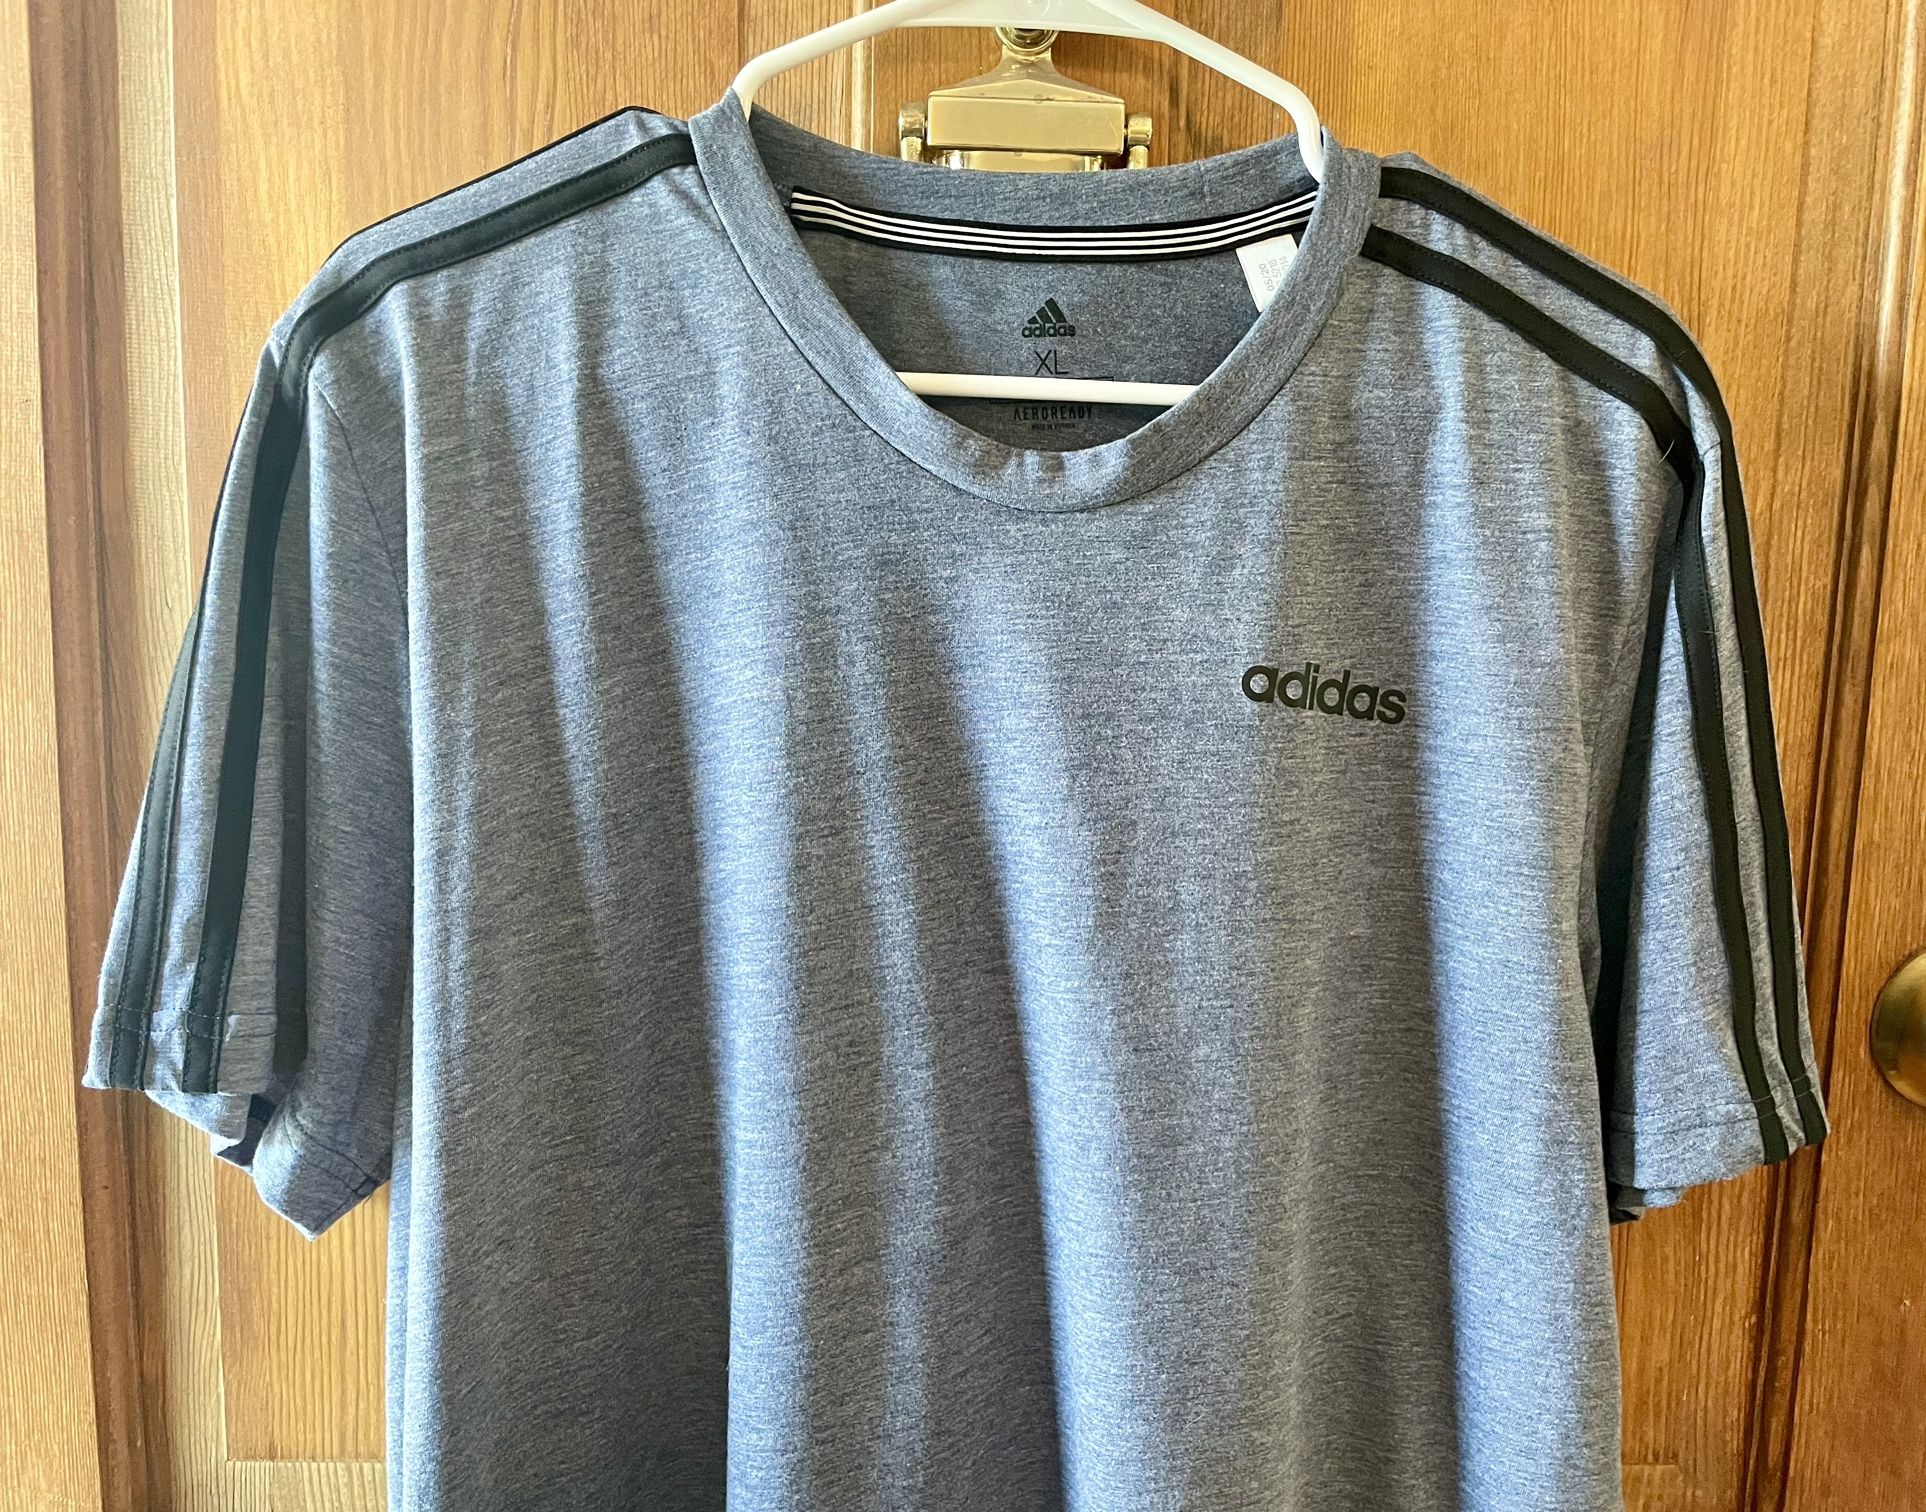 Near New! Very nice men’s Adida athletic shirt,  size XL.